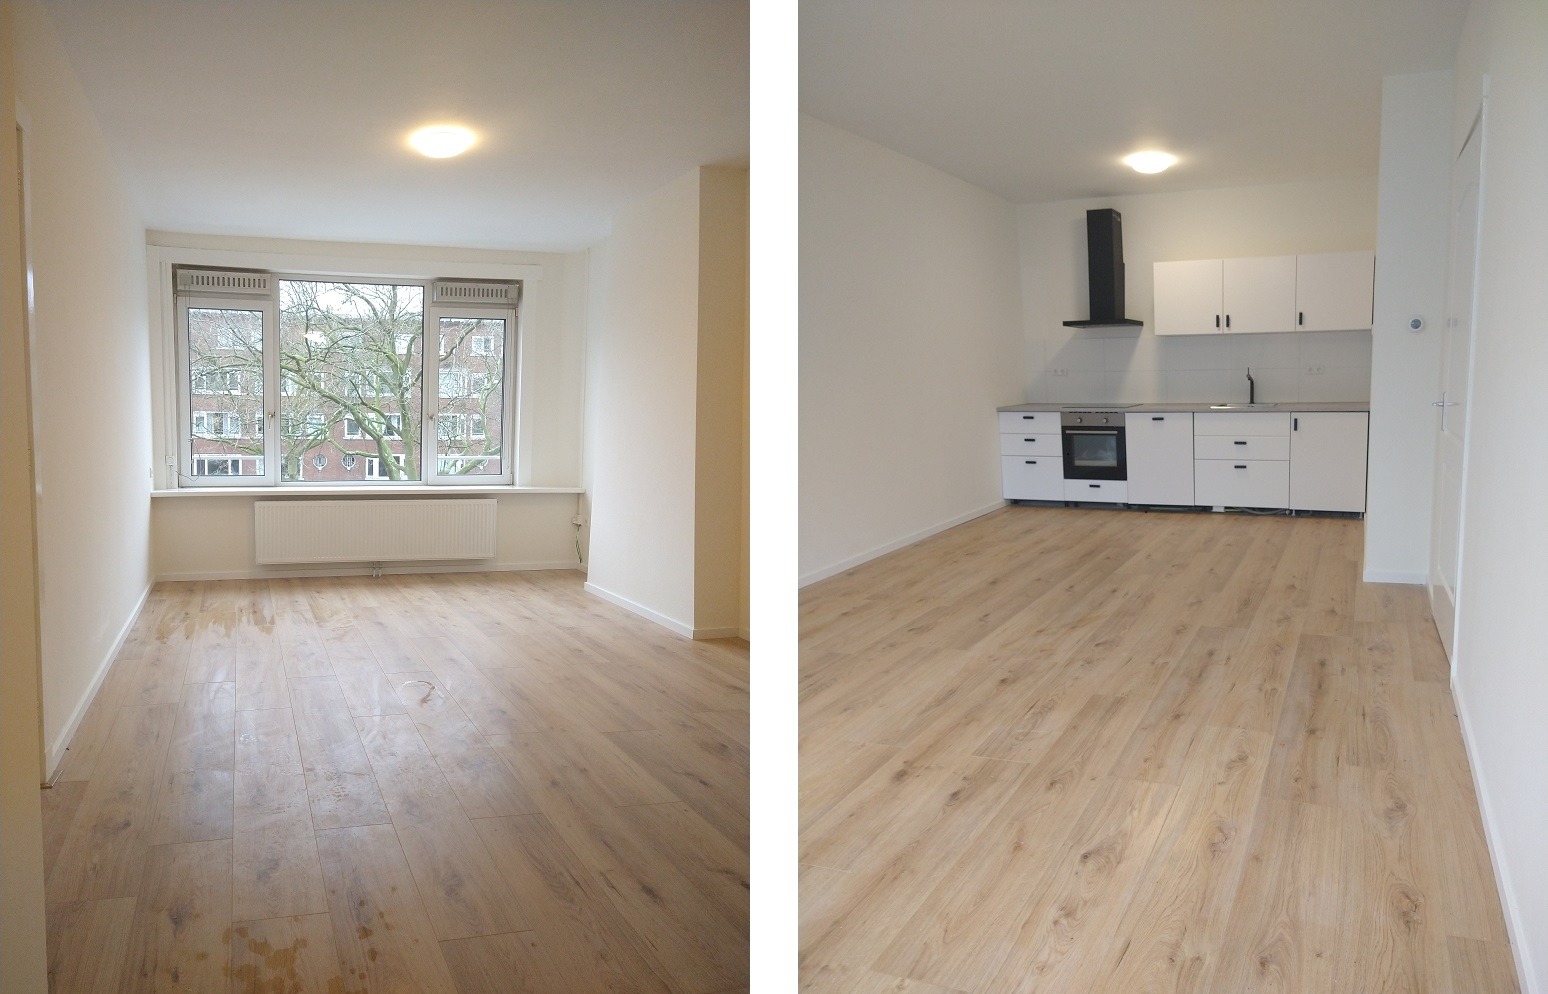 Woning / appartement - Rotterdam - Pleinweg 101 A en B